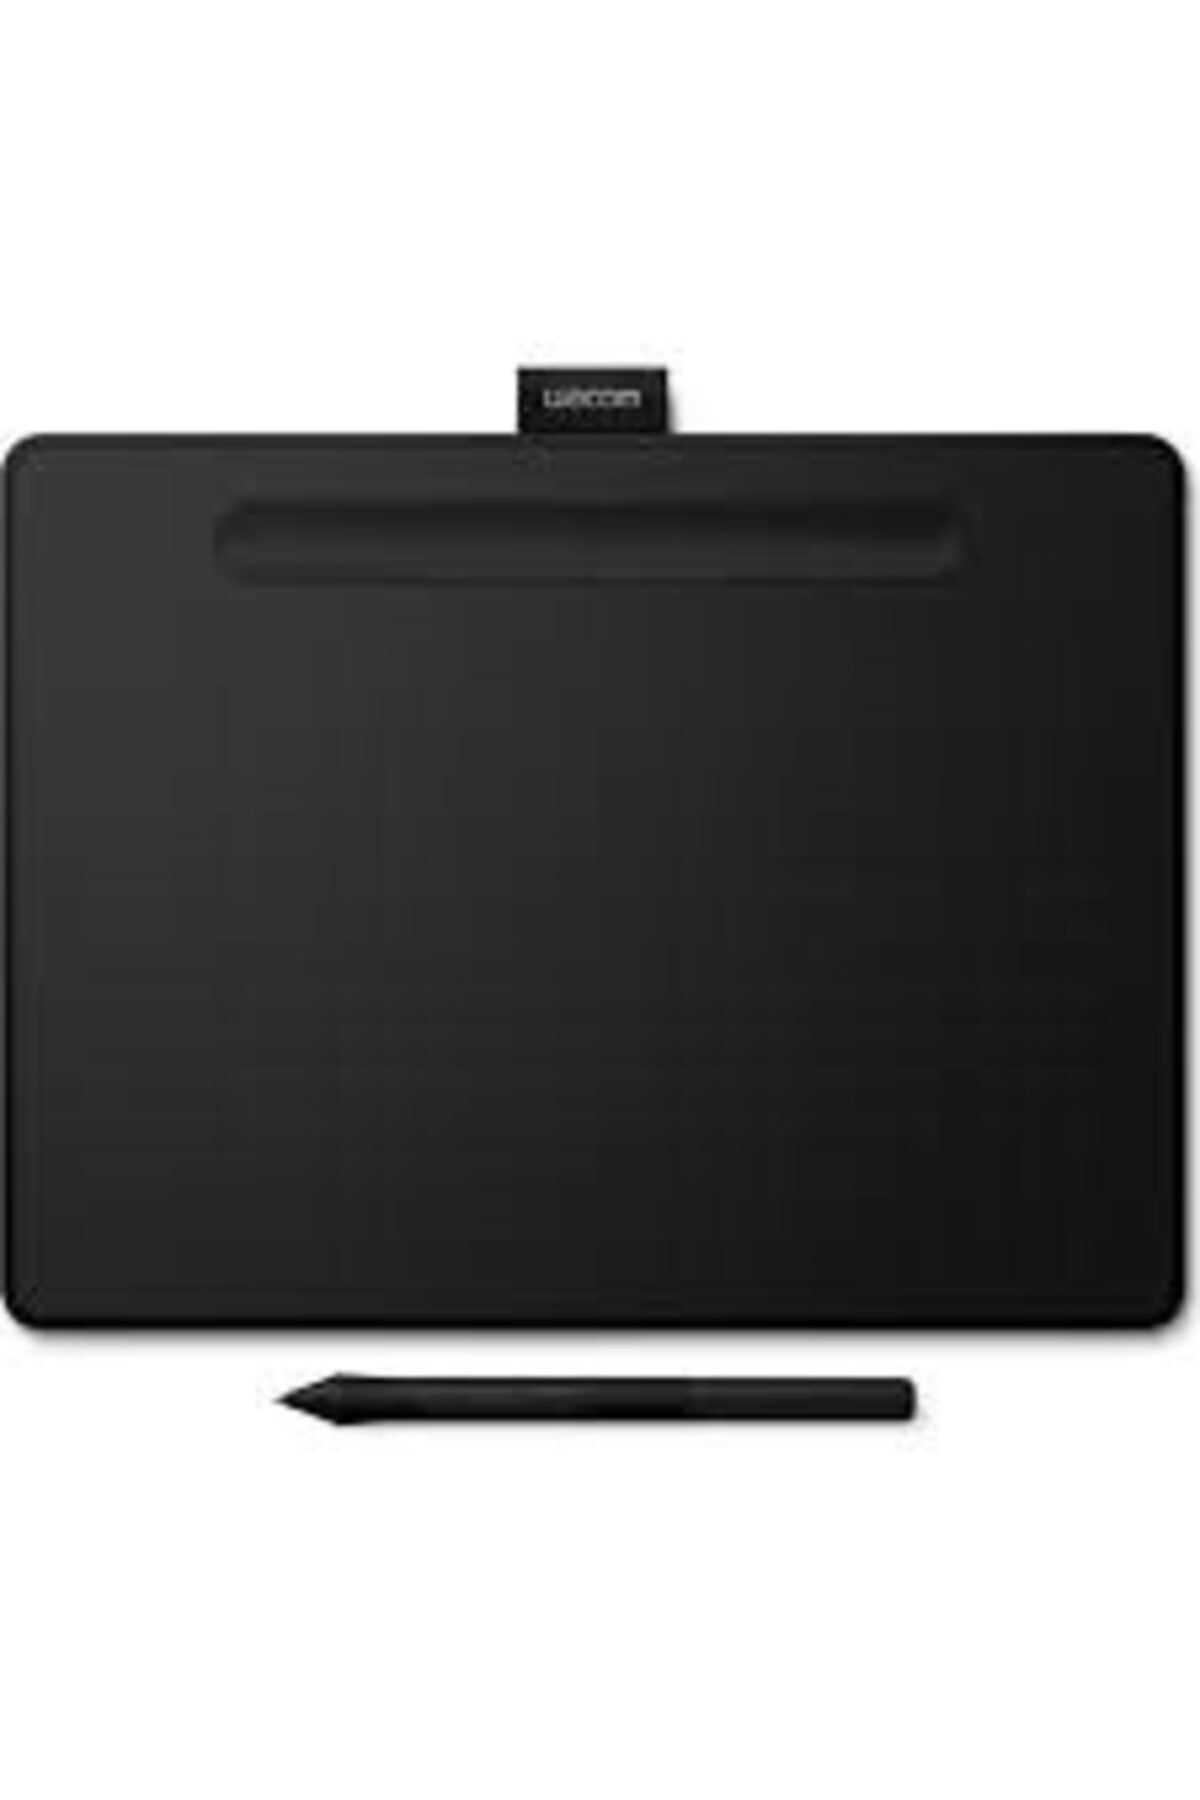 Wacom Ctl-4100wlk-n Intuos Small Black Kablosuz Grafik Tablet